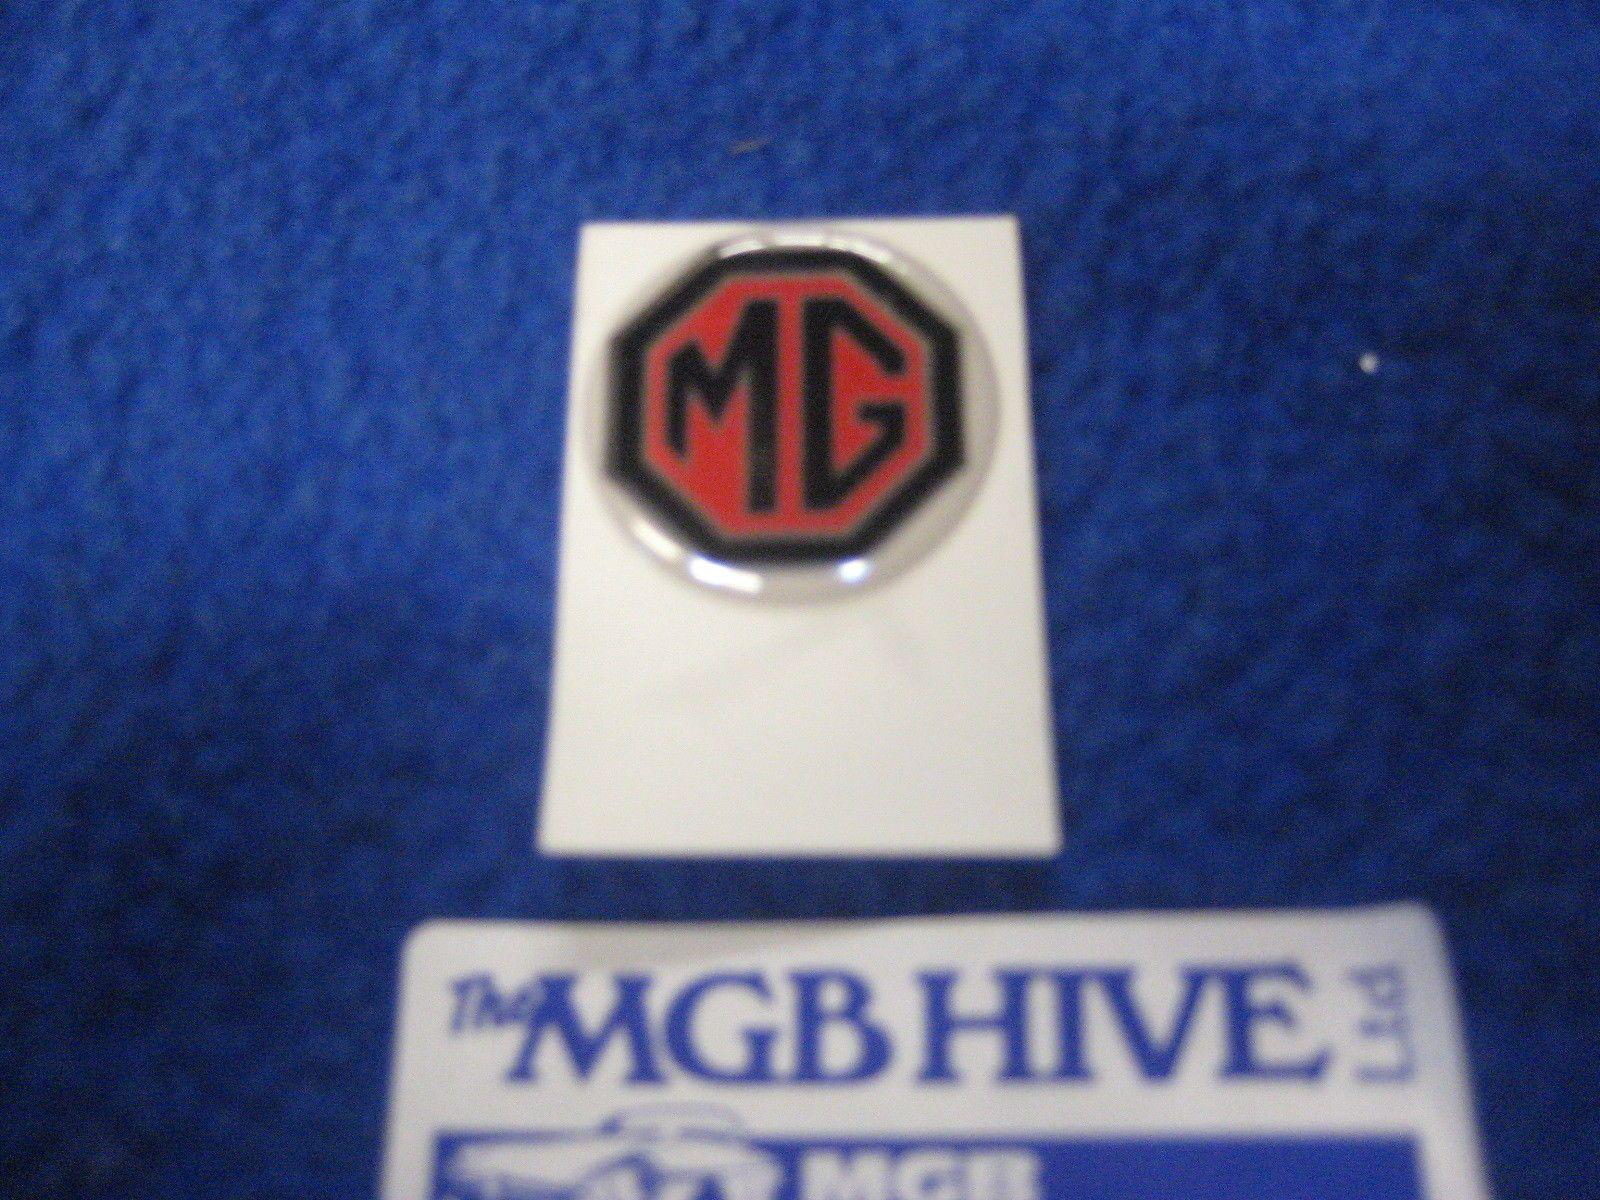 Blue Mg Logo - MGB & MIDGET SELF ADHESIVE BADGE MG LOGO. The MGB HIVE